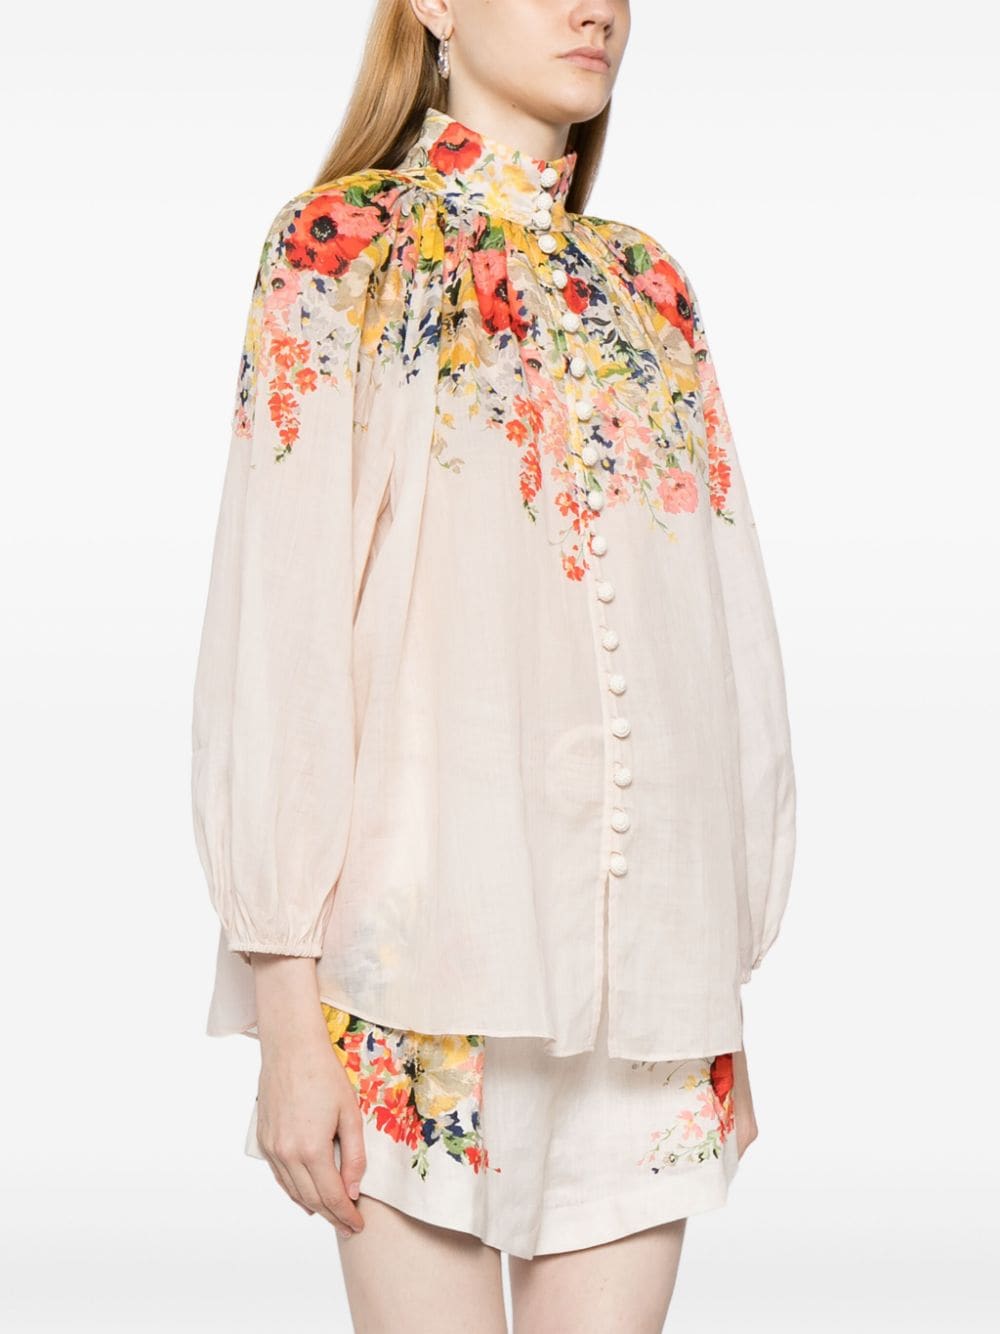 Alight Billow floral blouse